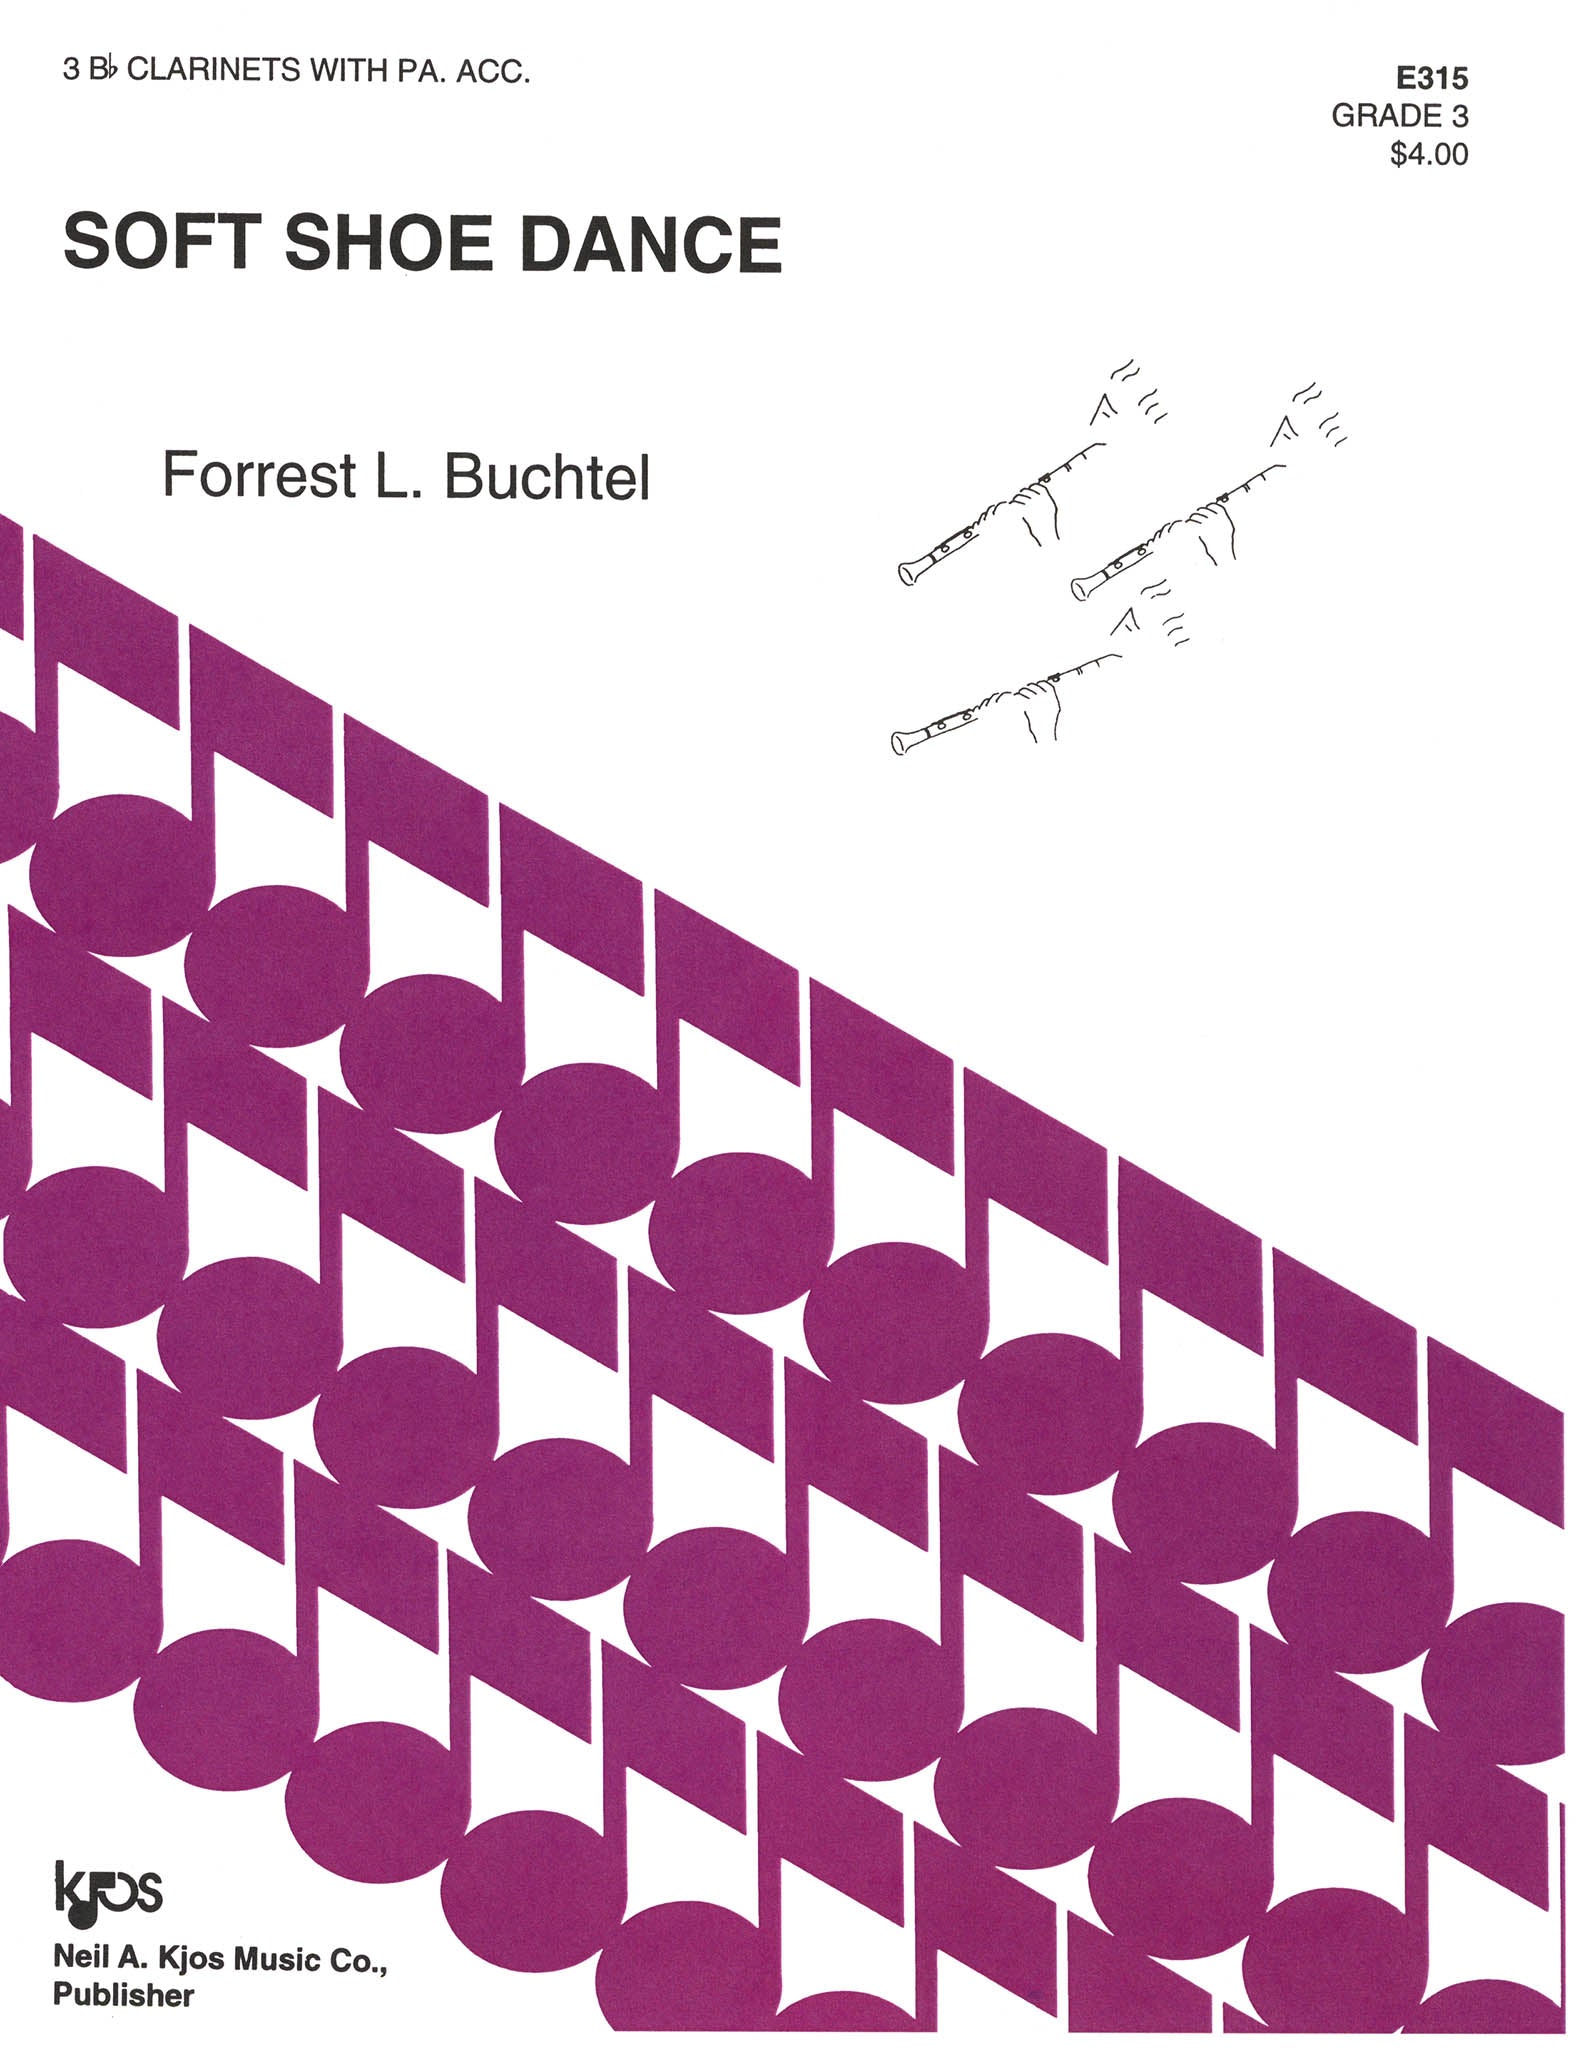 Soft Shoe Dance Cover